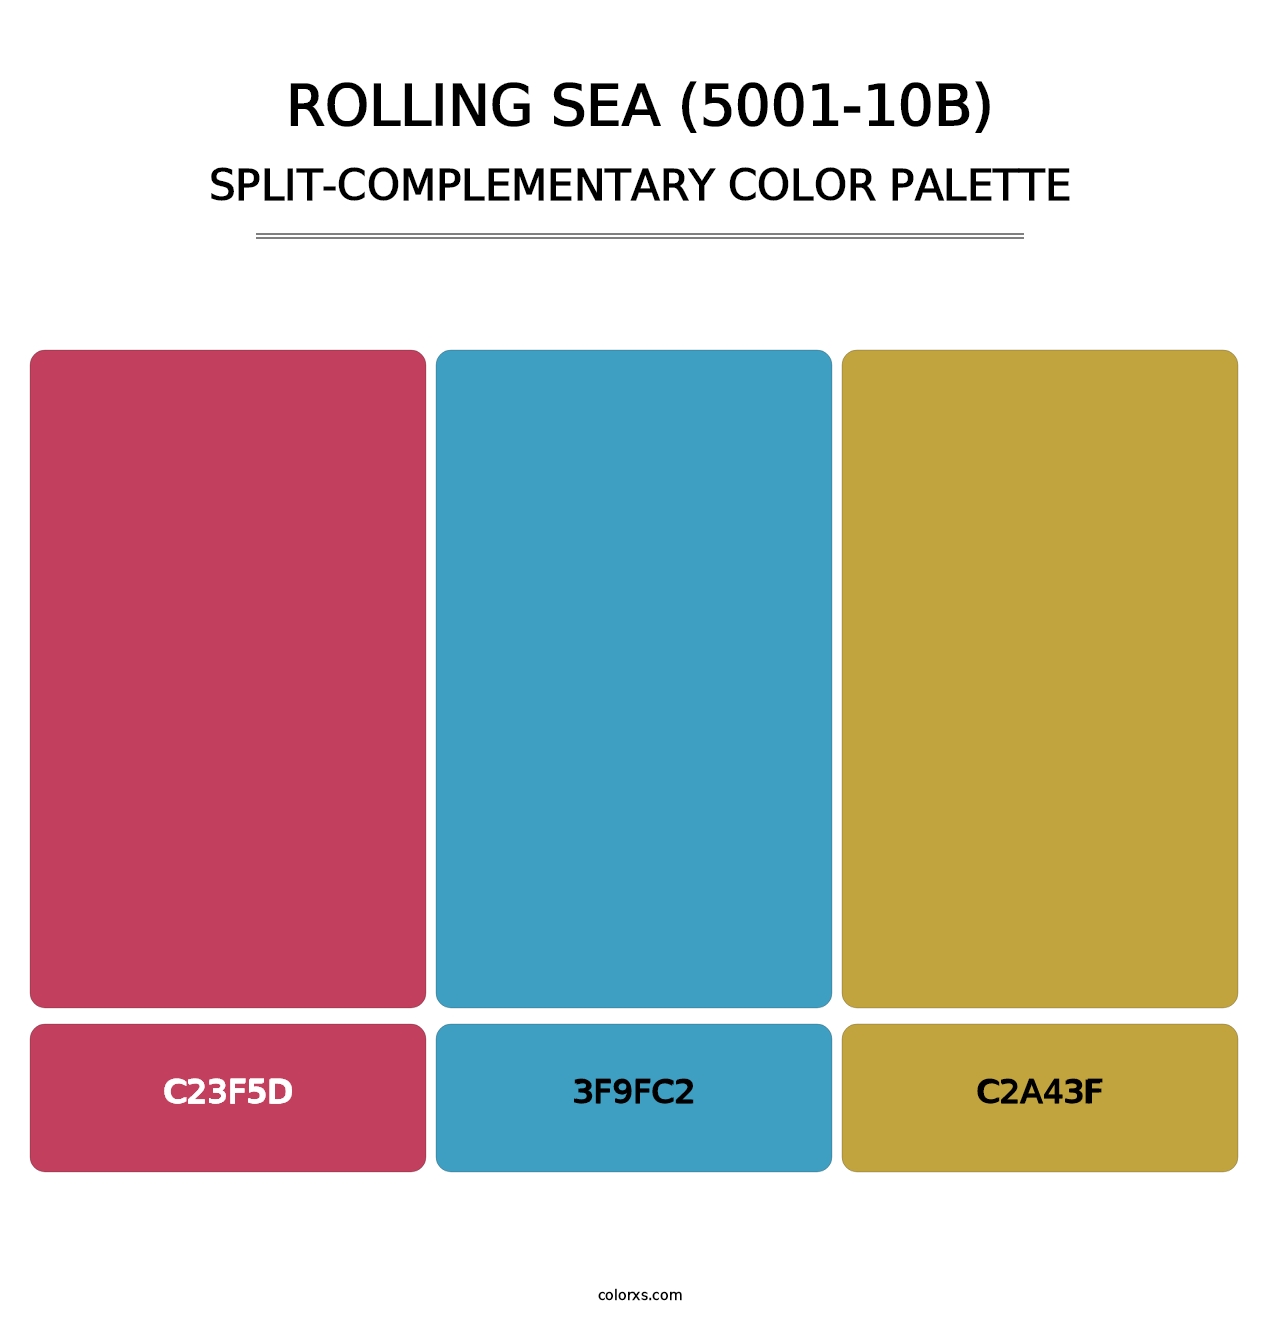 Rolling Sea (5001-10B) - Split-Complementary Color Palette